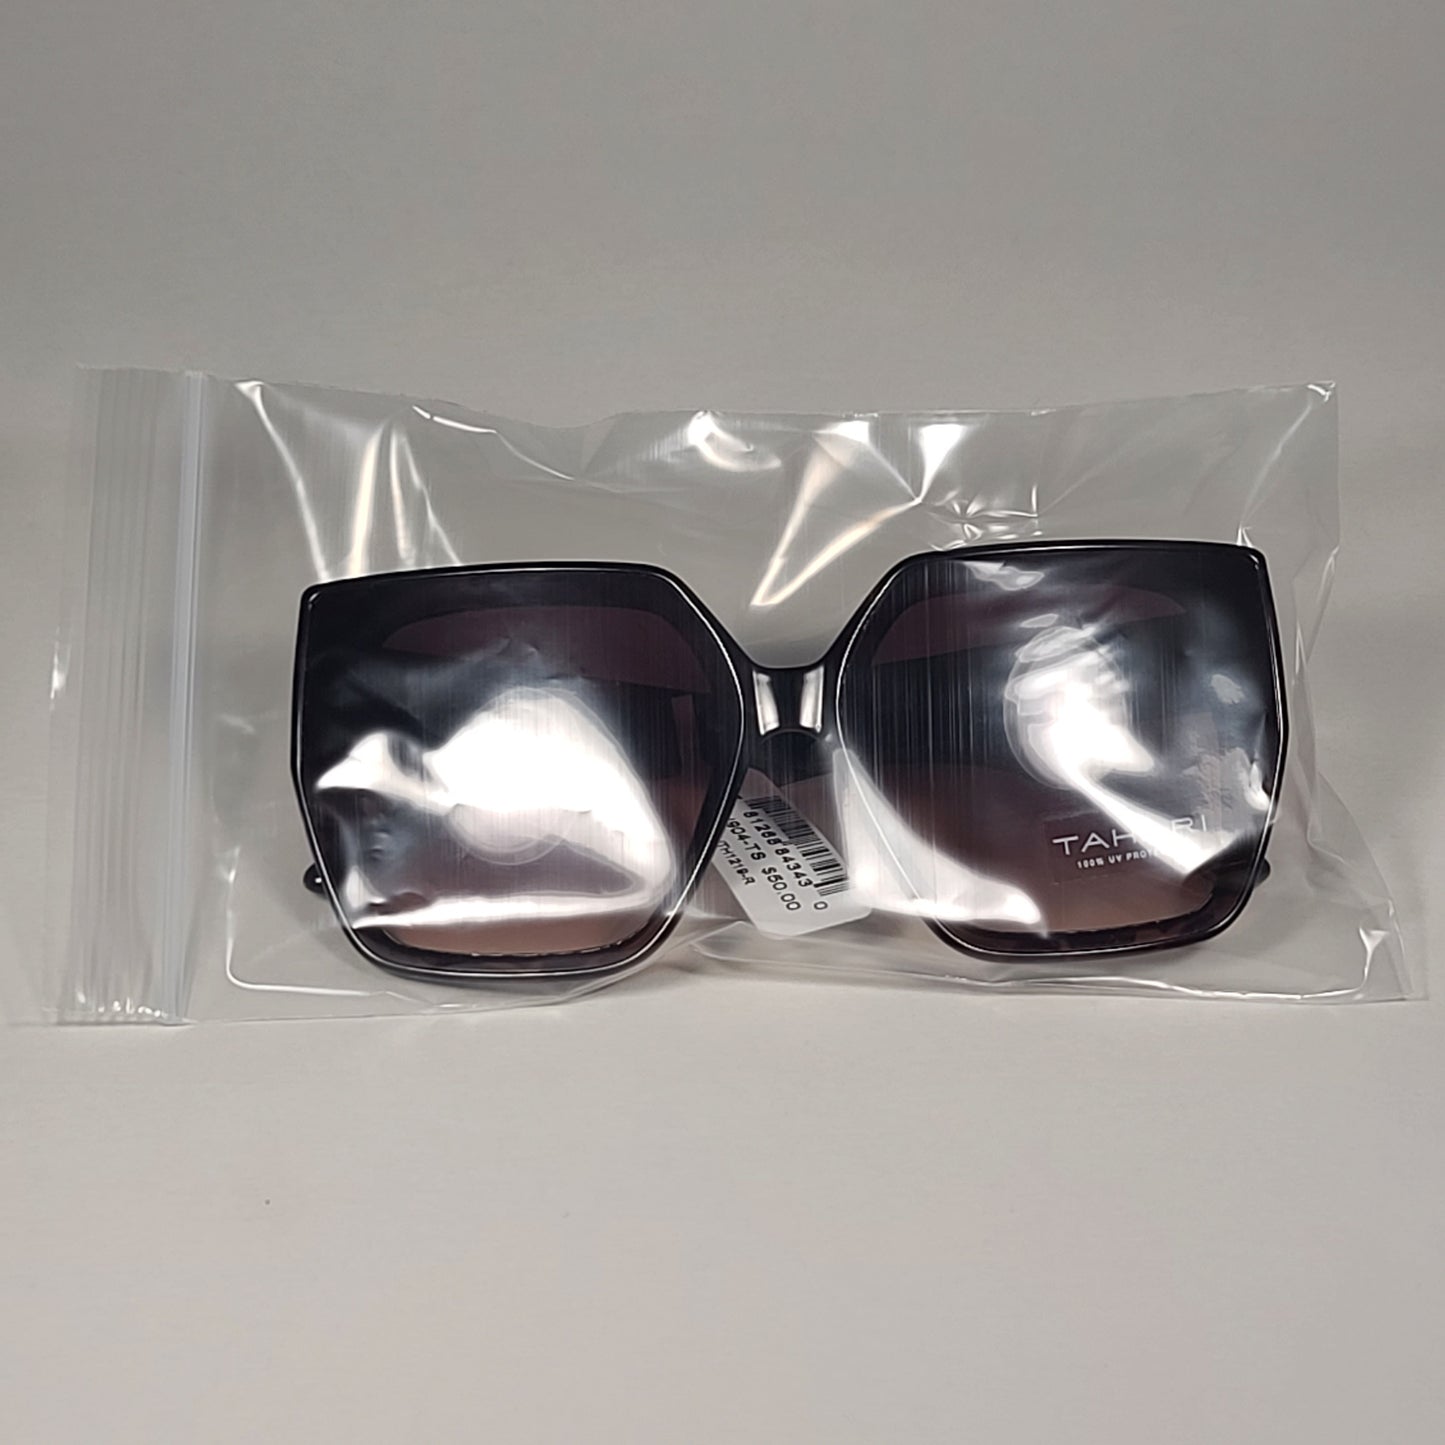 Tahari TH904 TS Oversize Square Sunglasses Brown Tortoise Frame Gradient Lens - Sunglasses